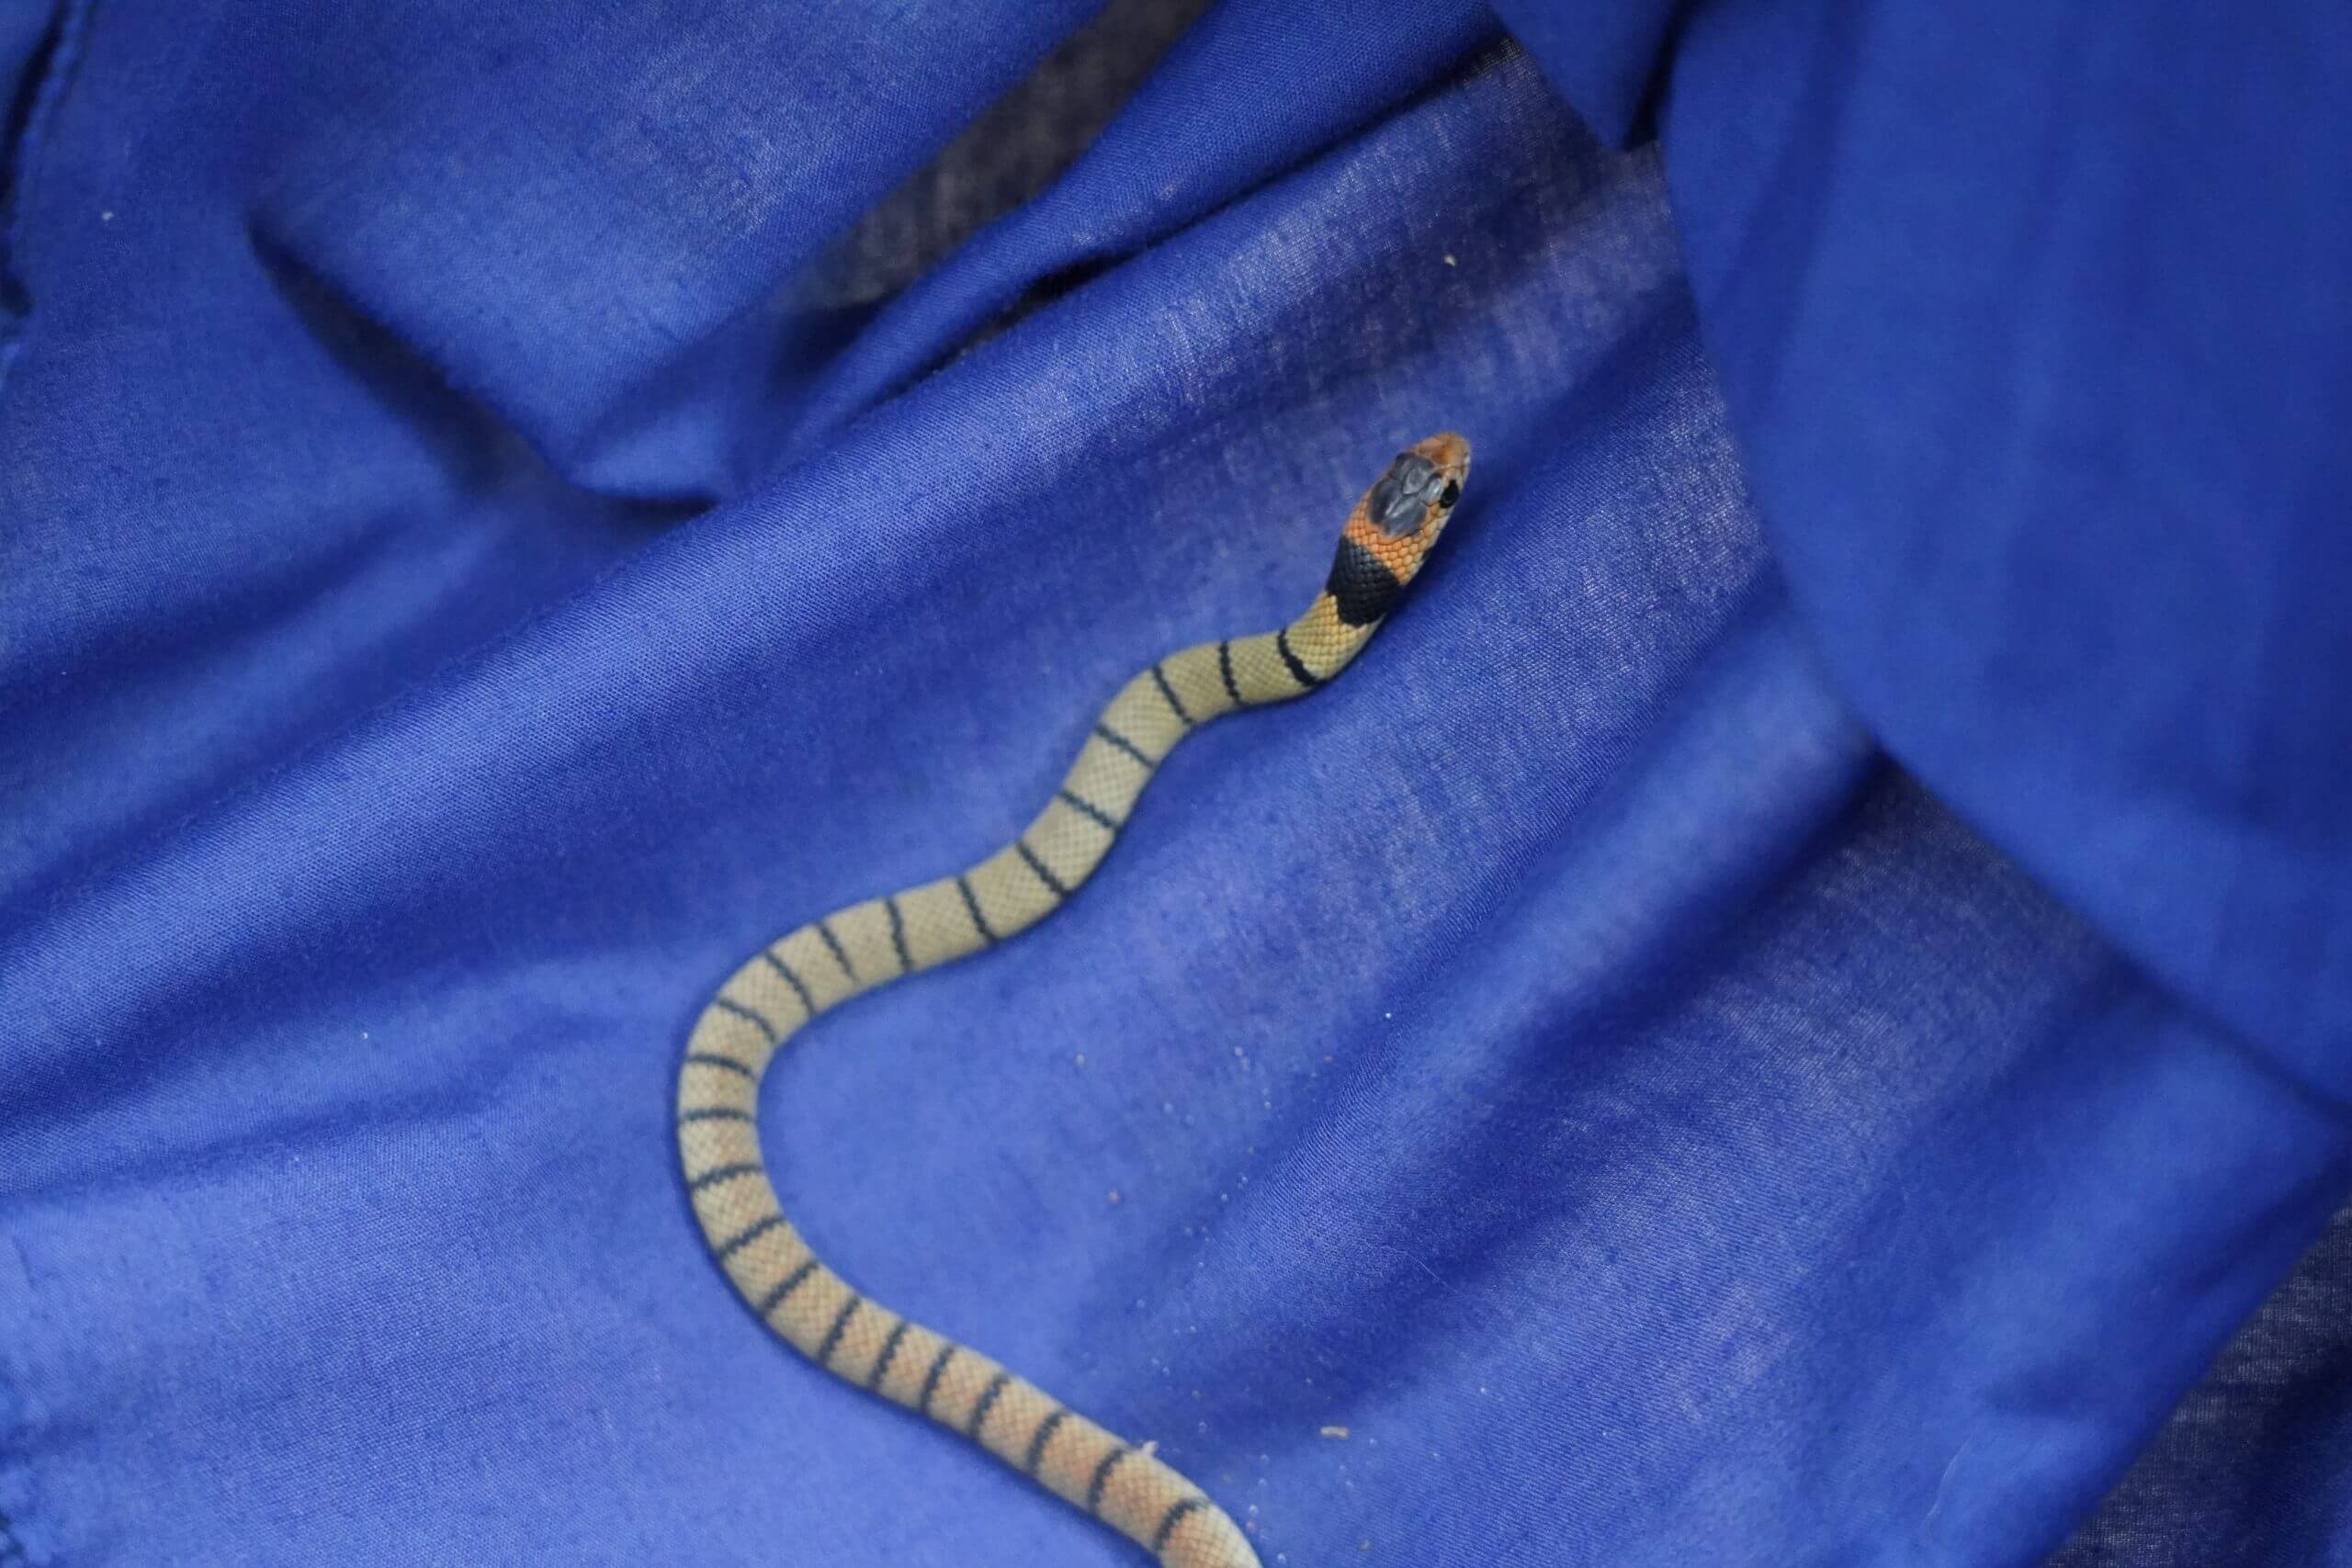 Eastern Brown Snake in Snake Bag